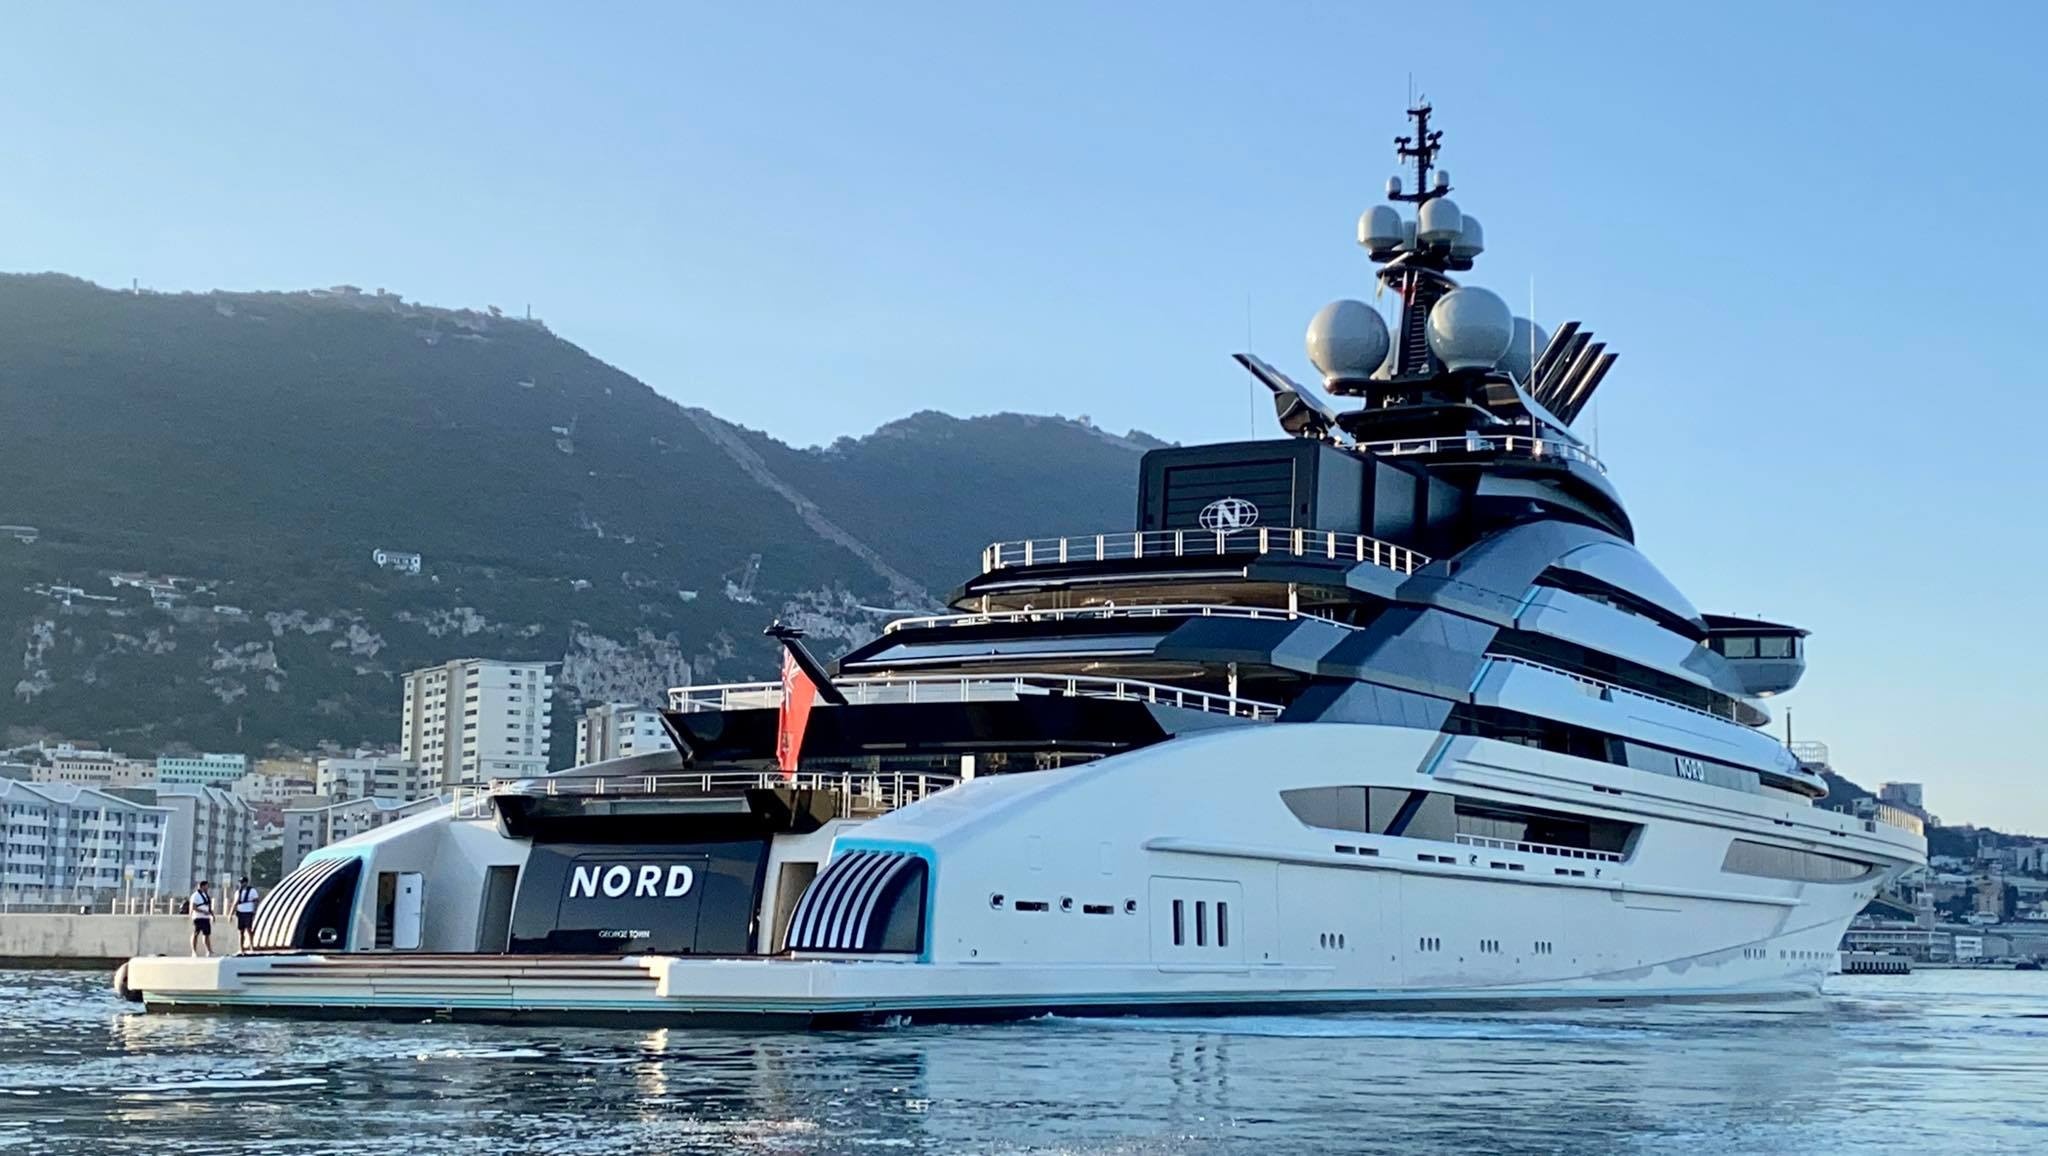 NORD yacht • Lurssen • 2021 • owner Alexei Mordashov